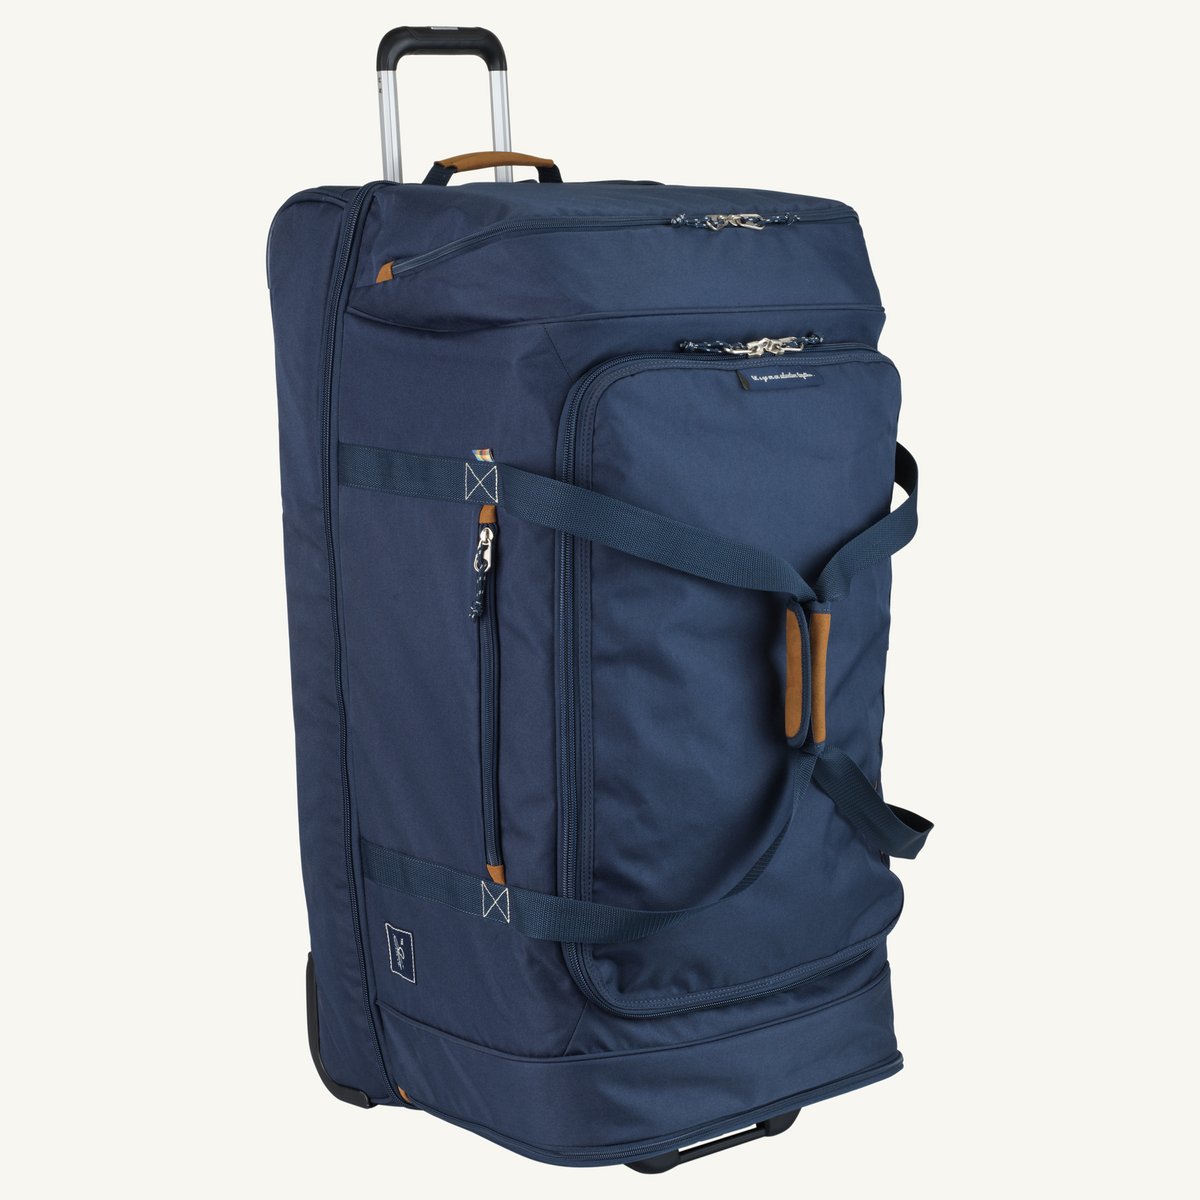 Best size rolling adventure bag llbean for flights - famlopers